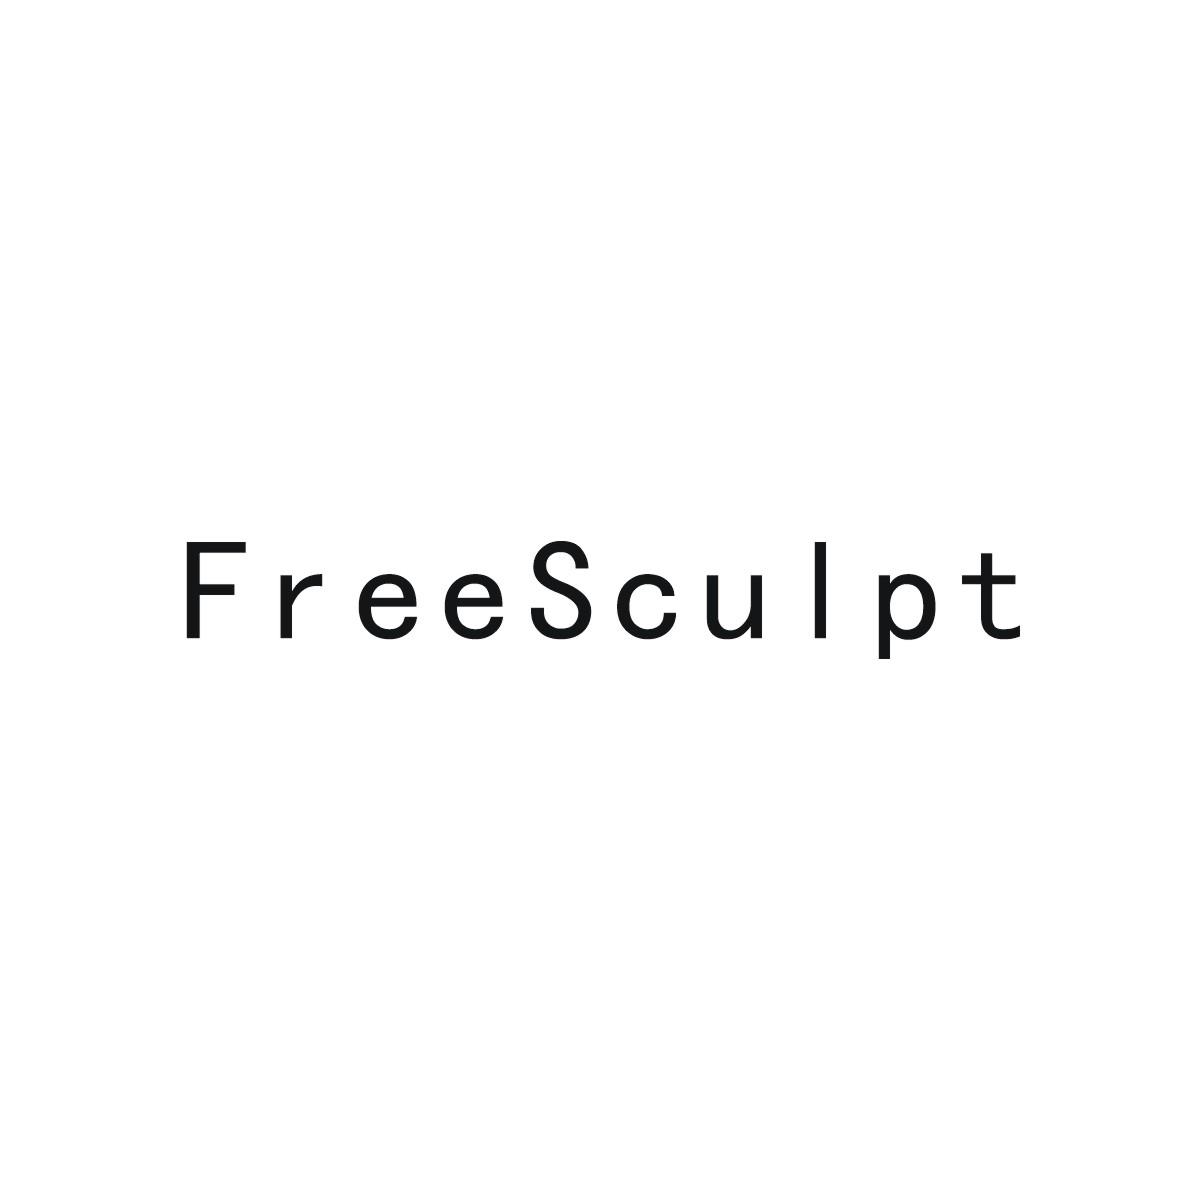 FREESCULPT喷灯商标转让费用买卖交易流程